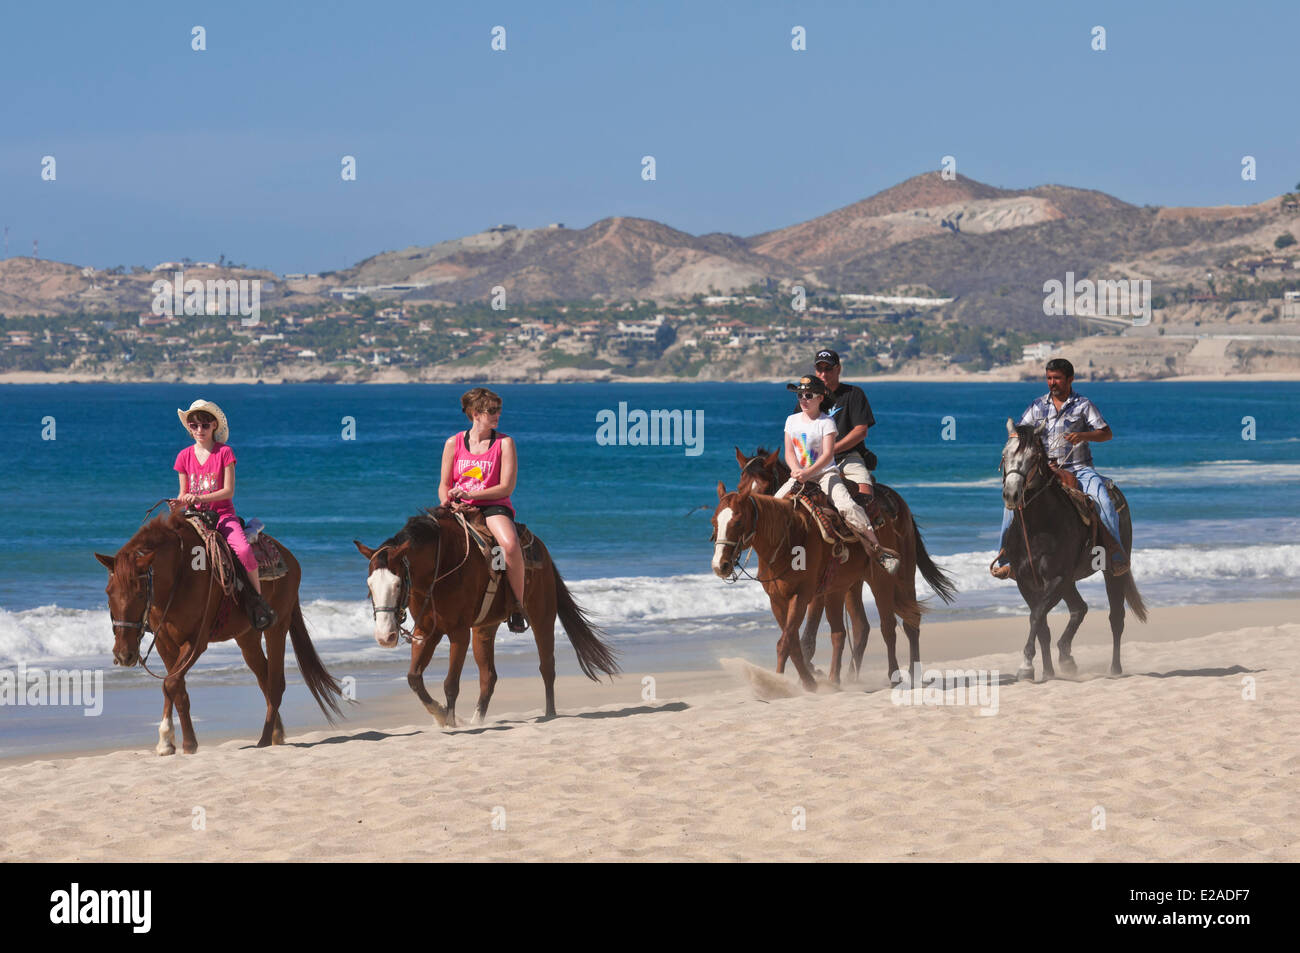 Mexico, Baja California Sur state, San Jose del Cabo, horse ride on the beach Stock Photo